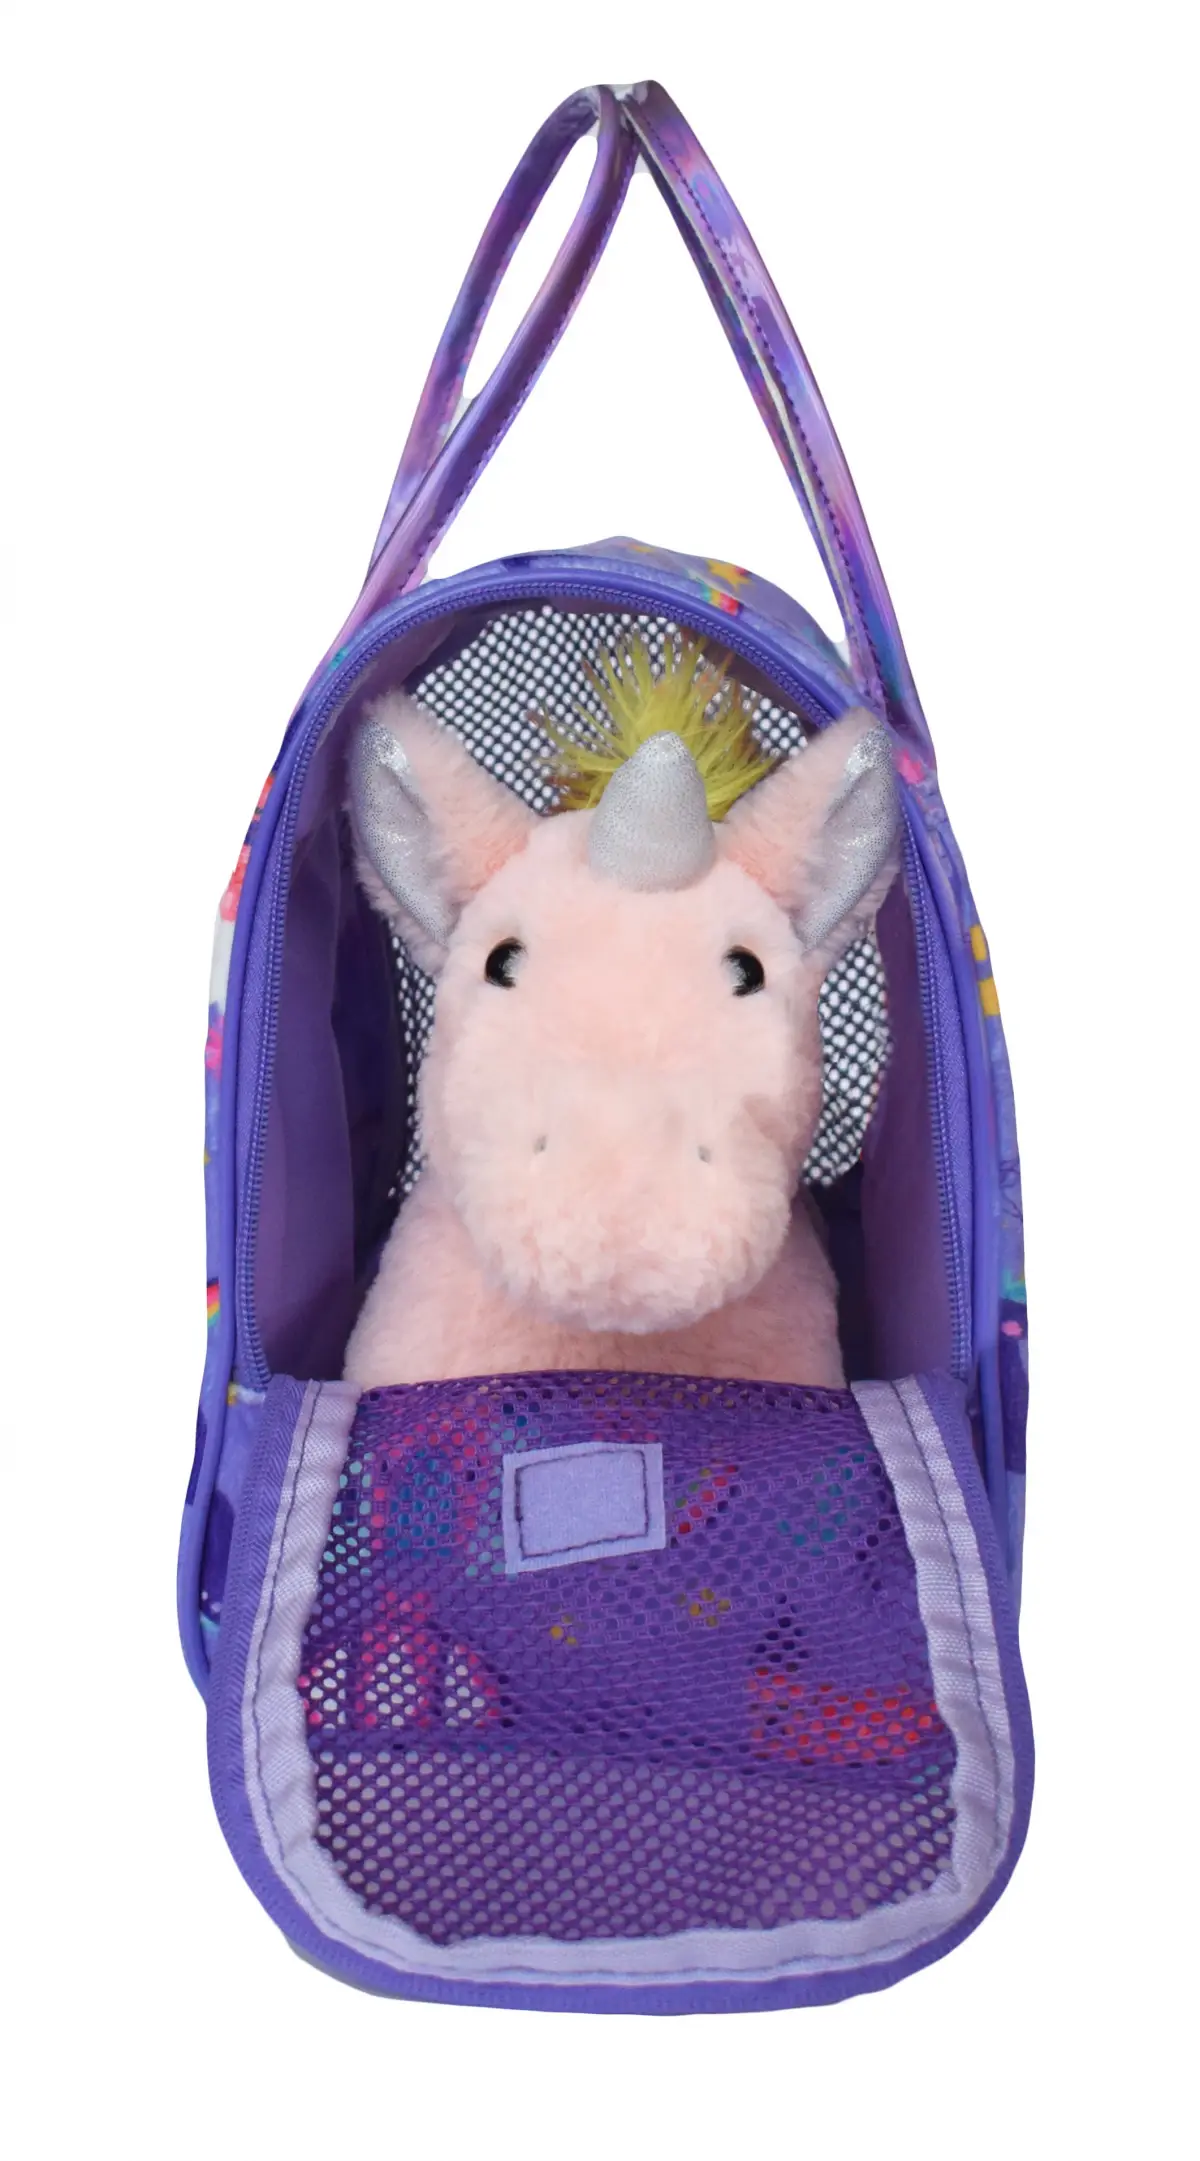 Shop Plush Unicorn In A Bag online | Lazada.com.ph